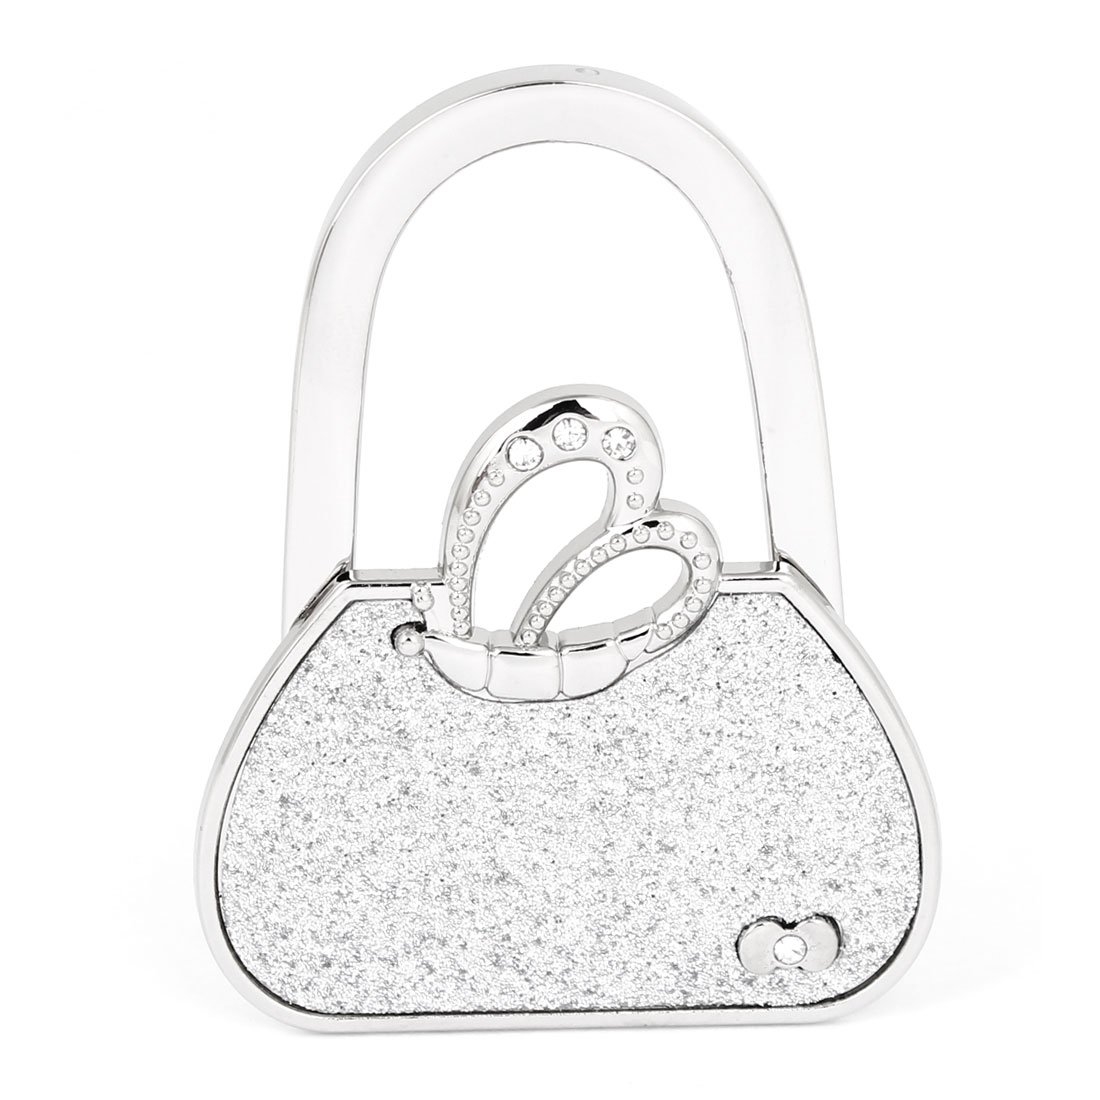 Fashion Culture Butterfly Purse Portable Handbag Hanger Purse Hook, Silver